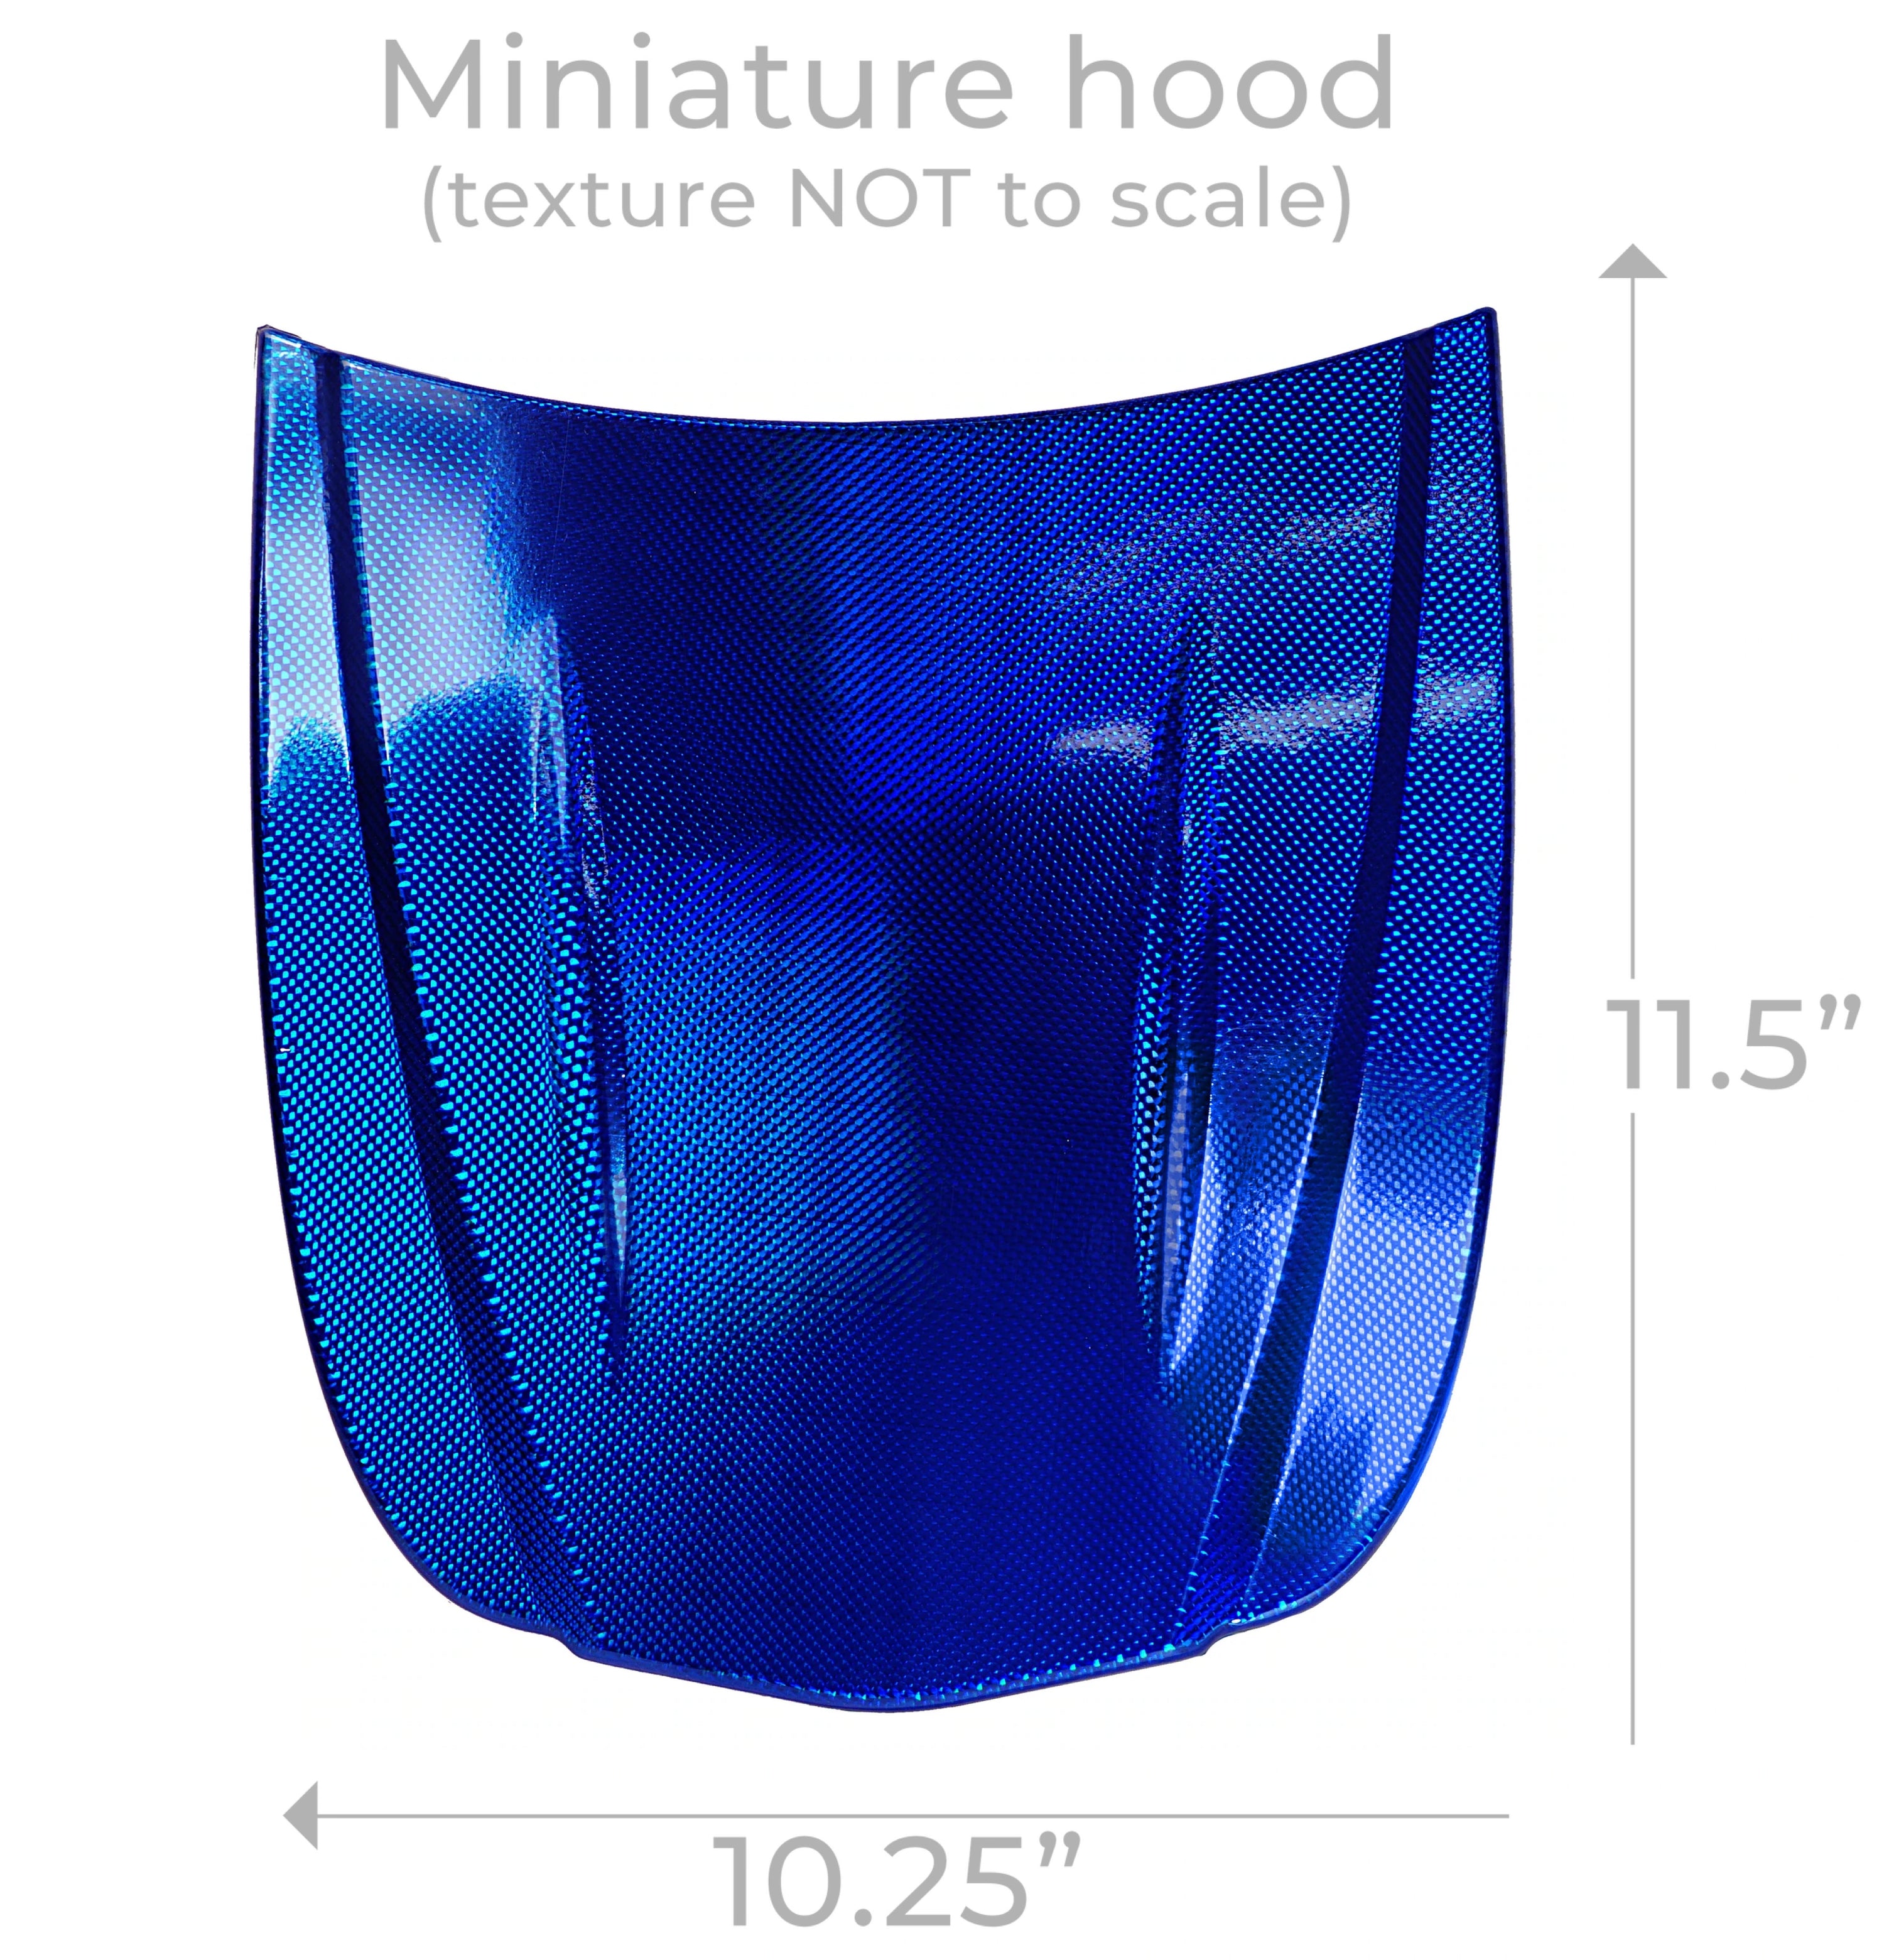 VVIVID+ Holographic Weave Blue Gloss